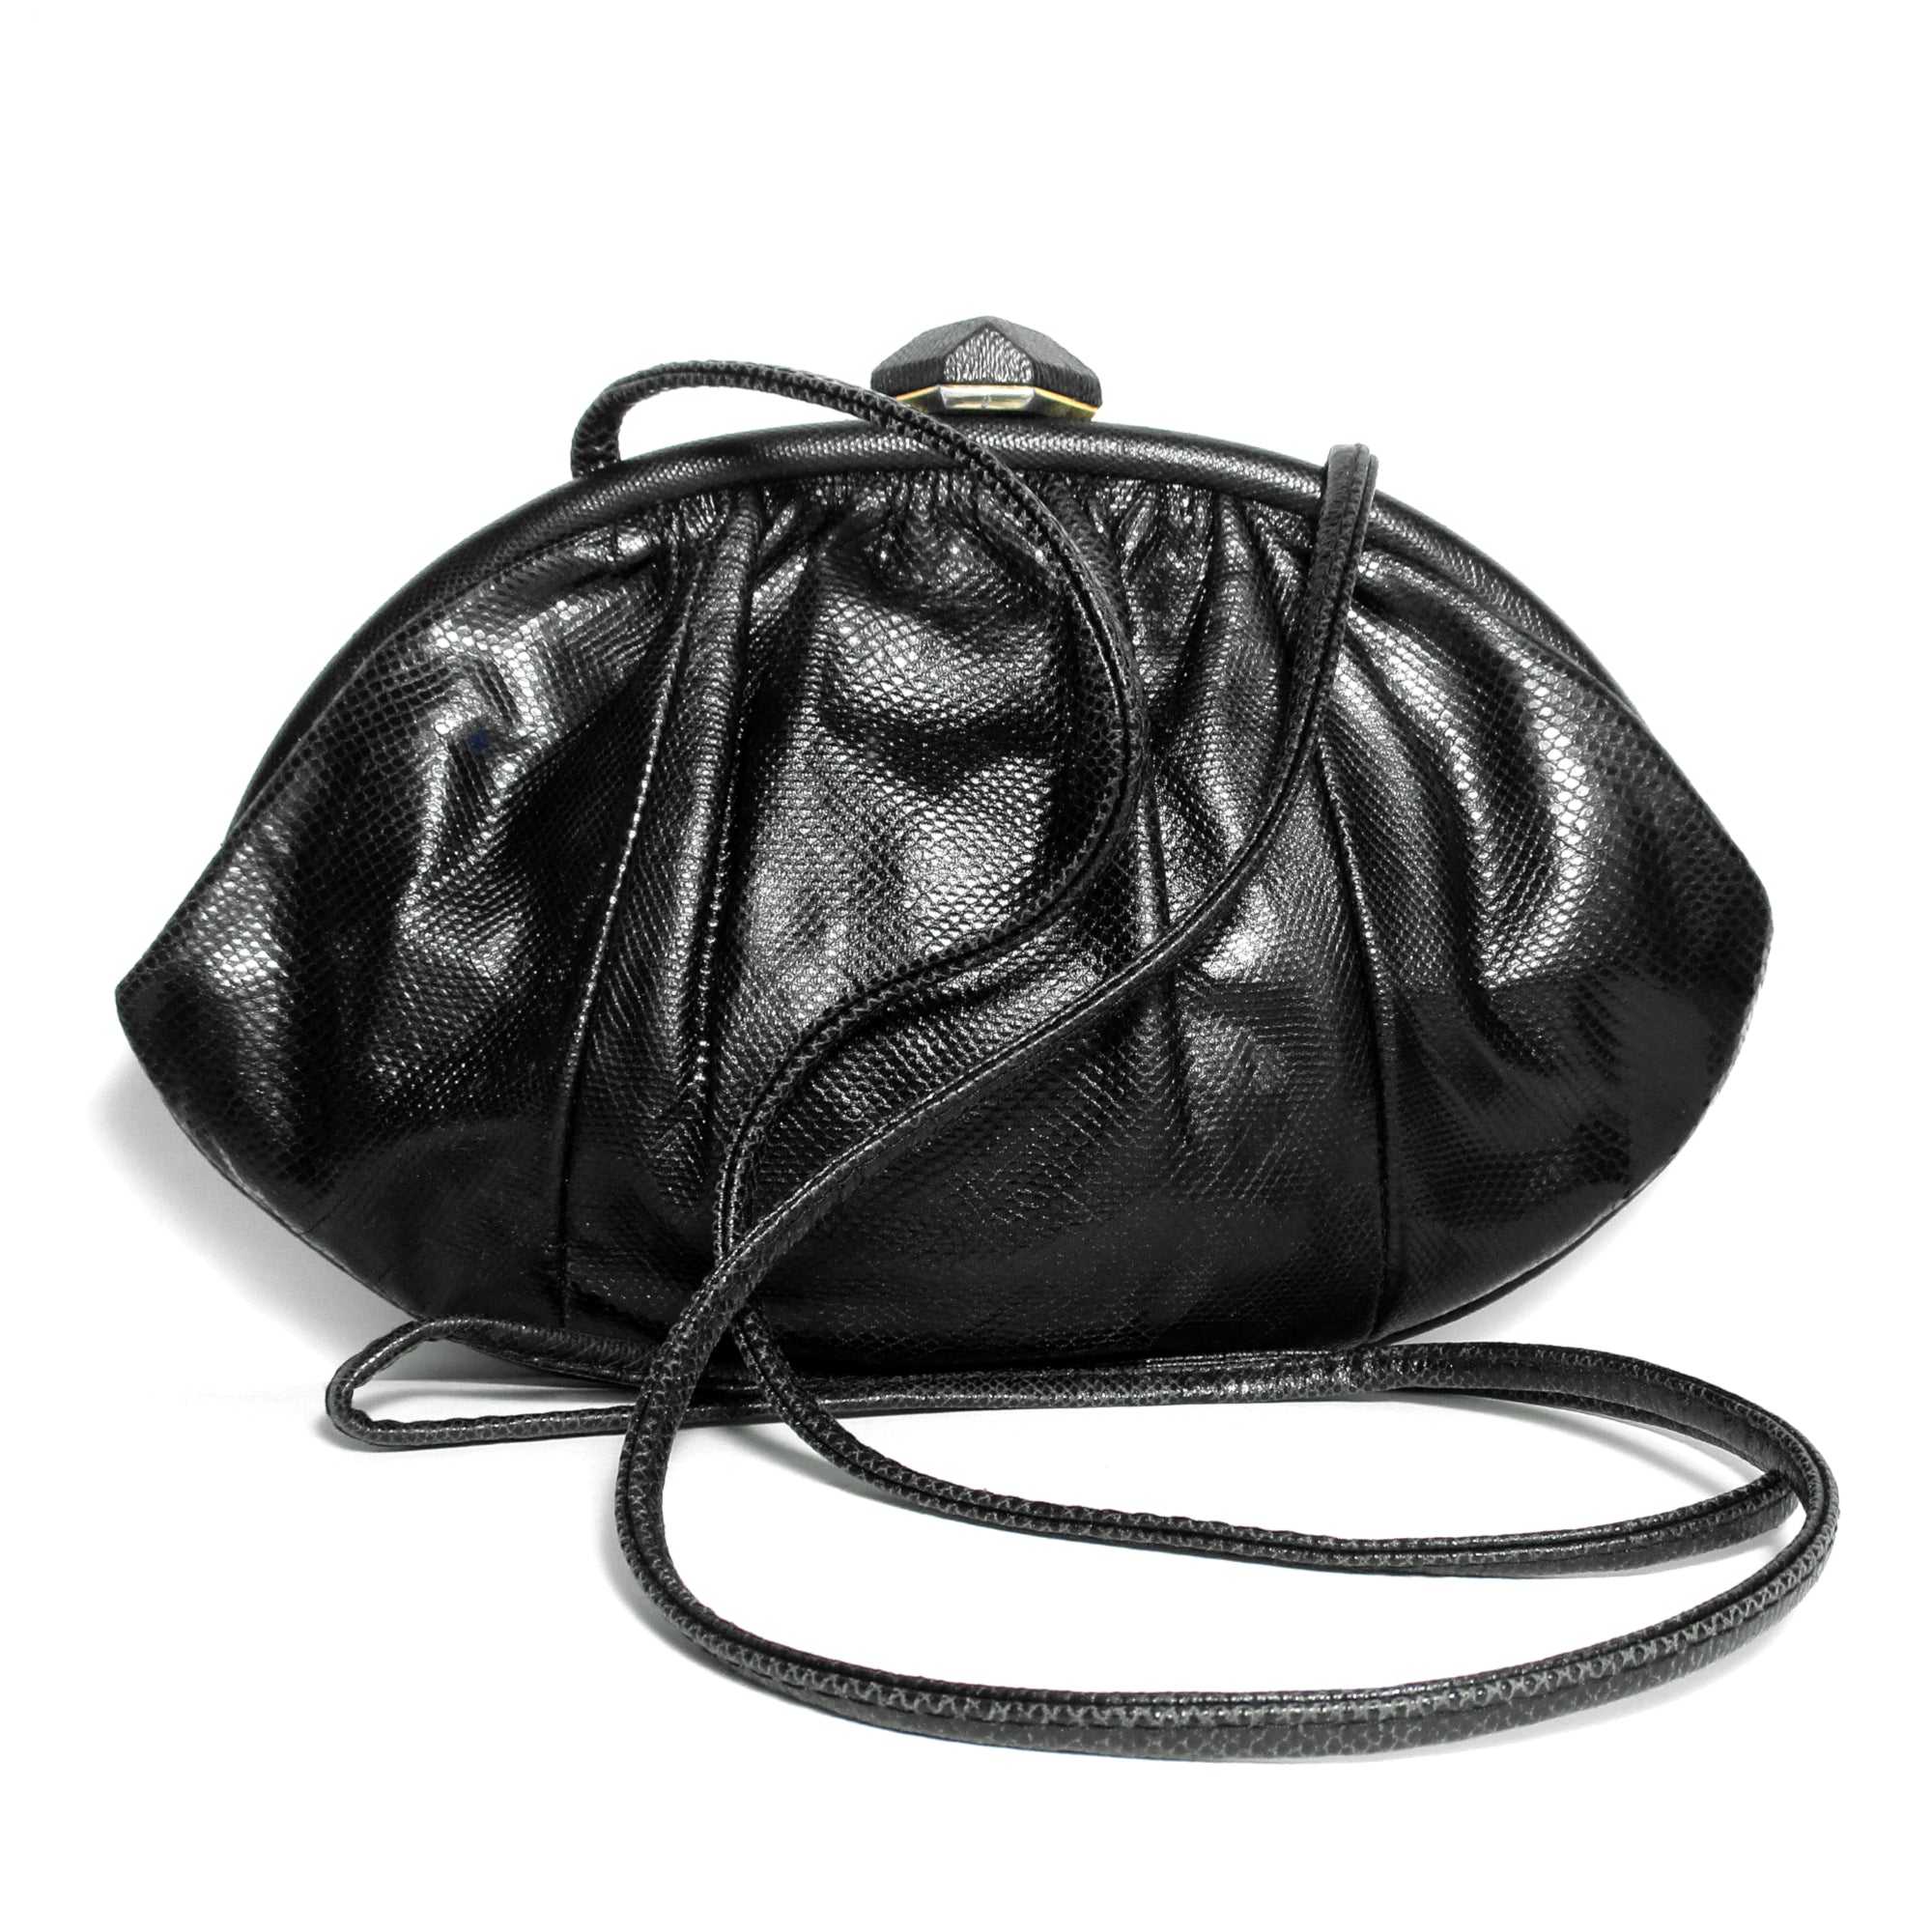 Vintage Black MM Ladies Handbag Snap Clutch Bag Purse 1950's 1960's